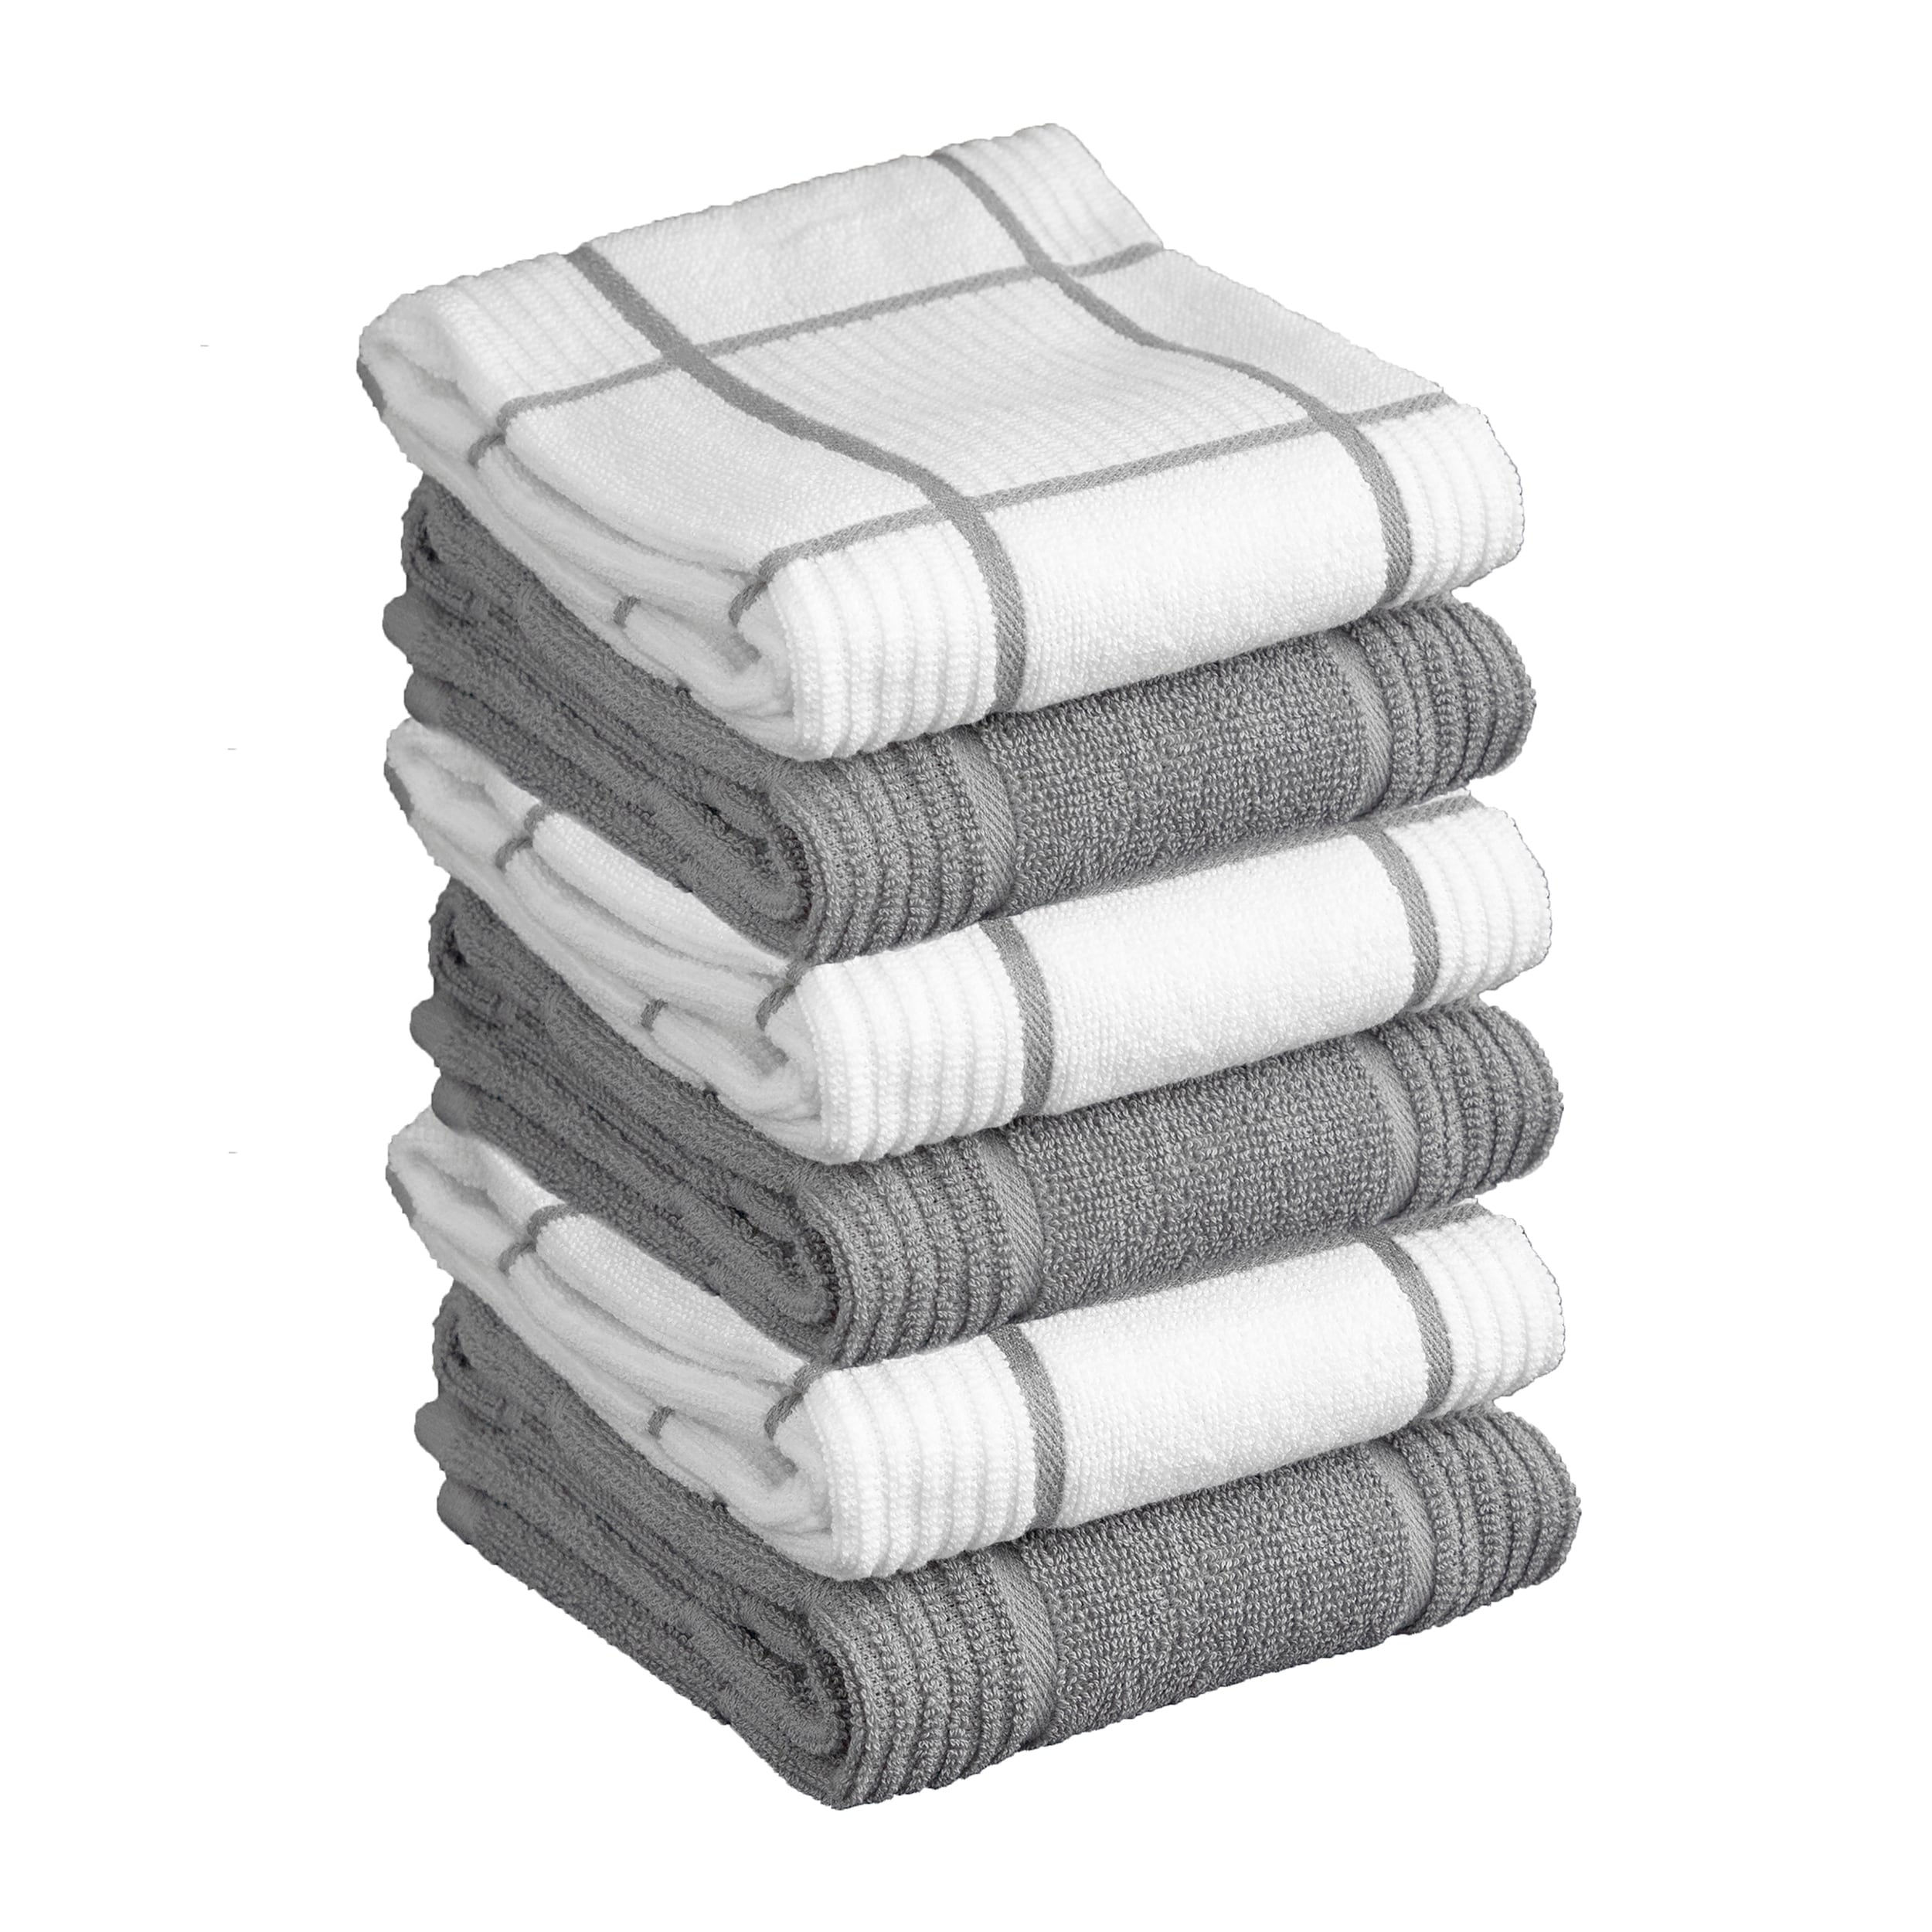 https://ak1.ostkcdn.com/images/products/is/images/direct/10a5b9e82acea74cfa466c7c155ffdb55ac01fb7/T-fal-Textiles-6-Pack-Solid-%26-Check-Parquet-Kitchen-Dish-Towel-Cloth-Set.jpg